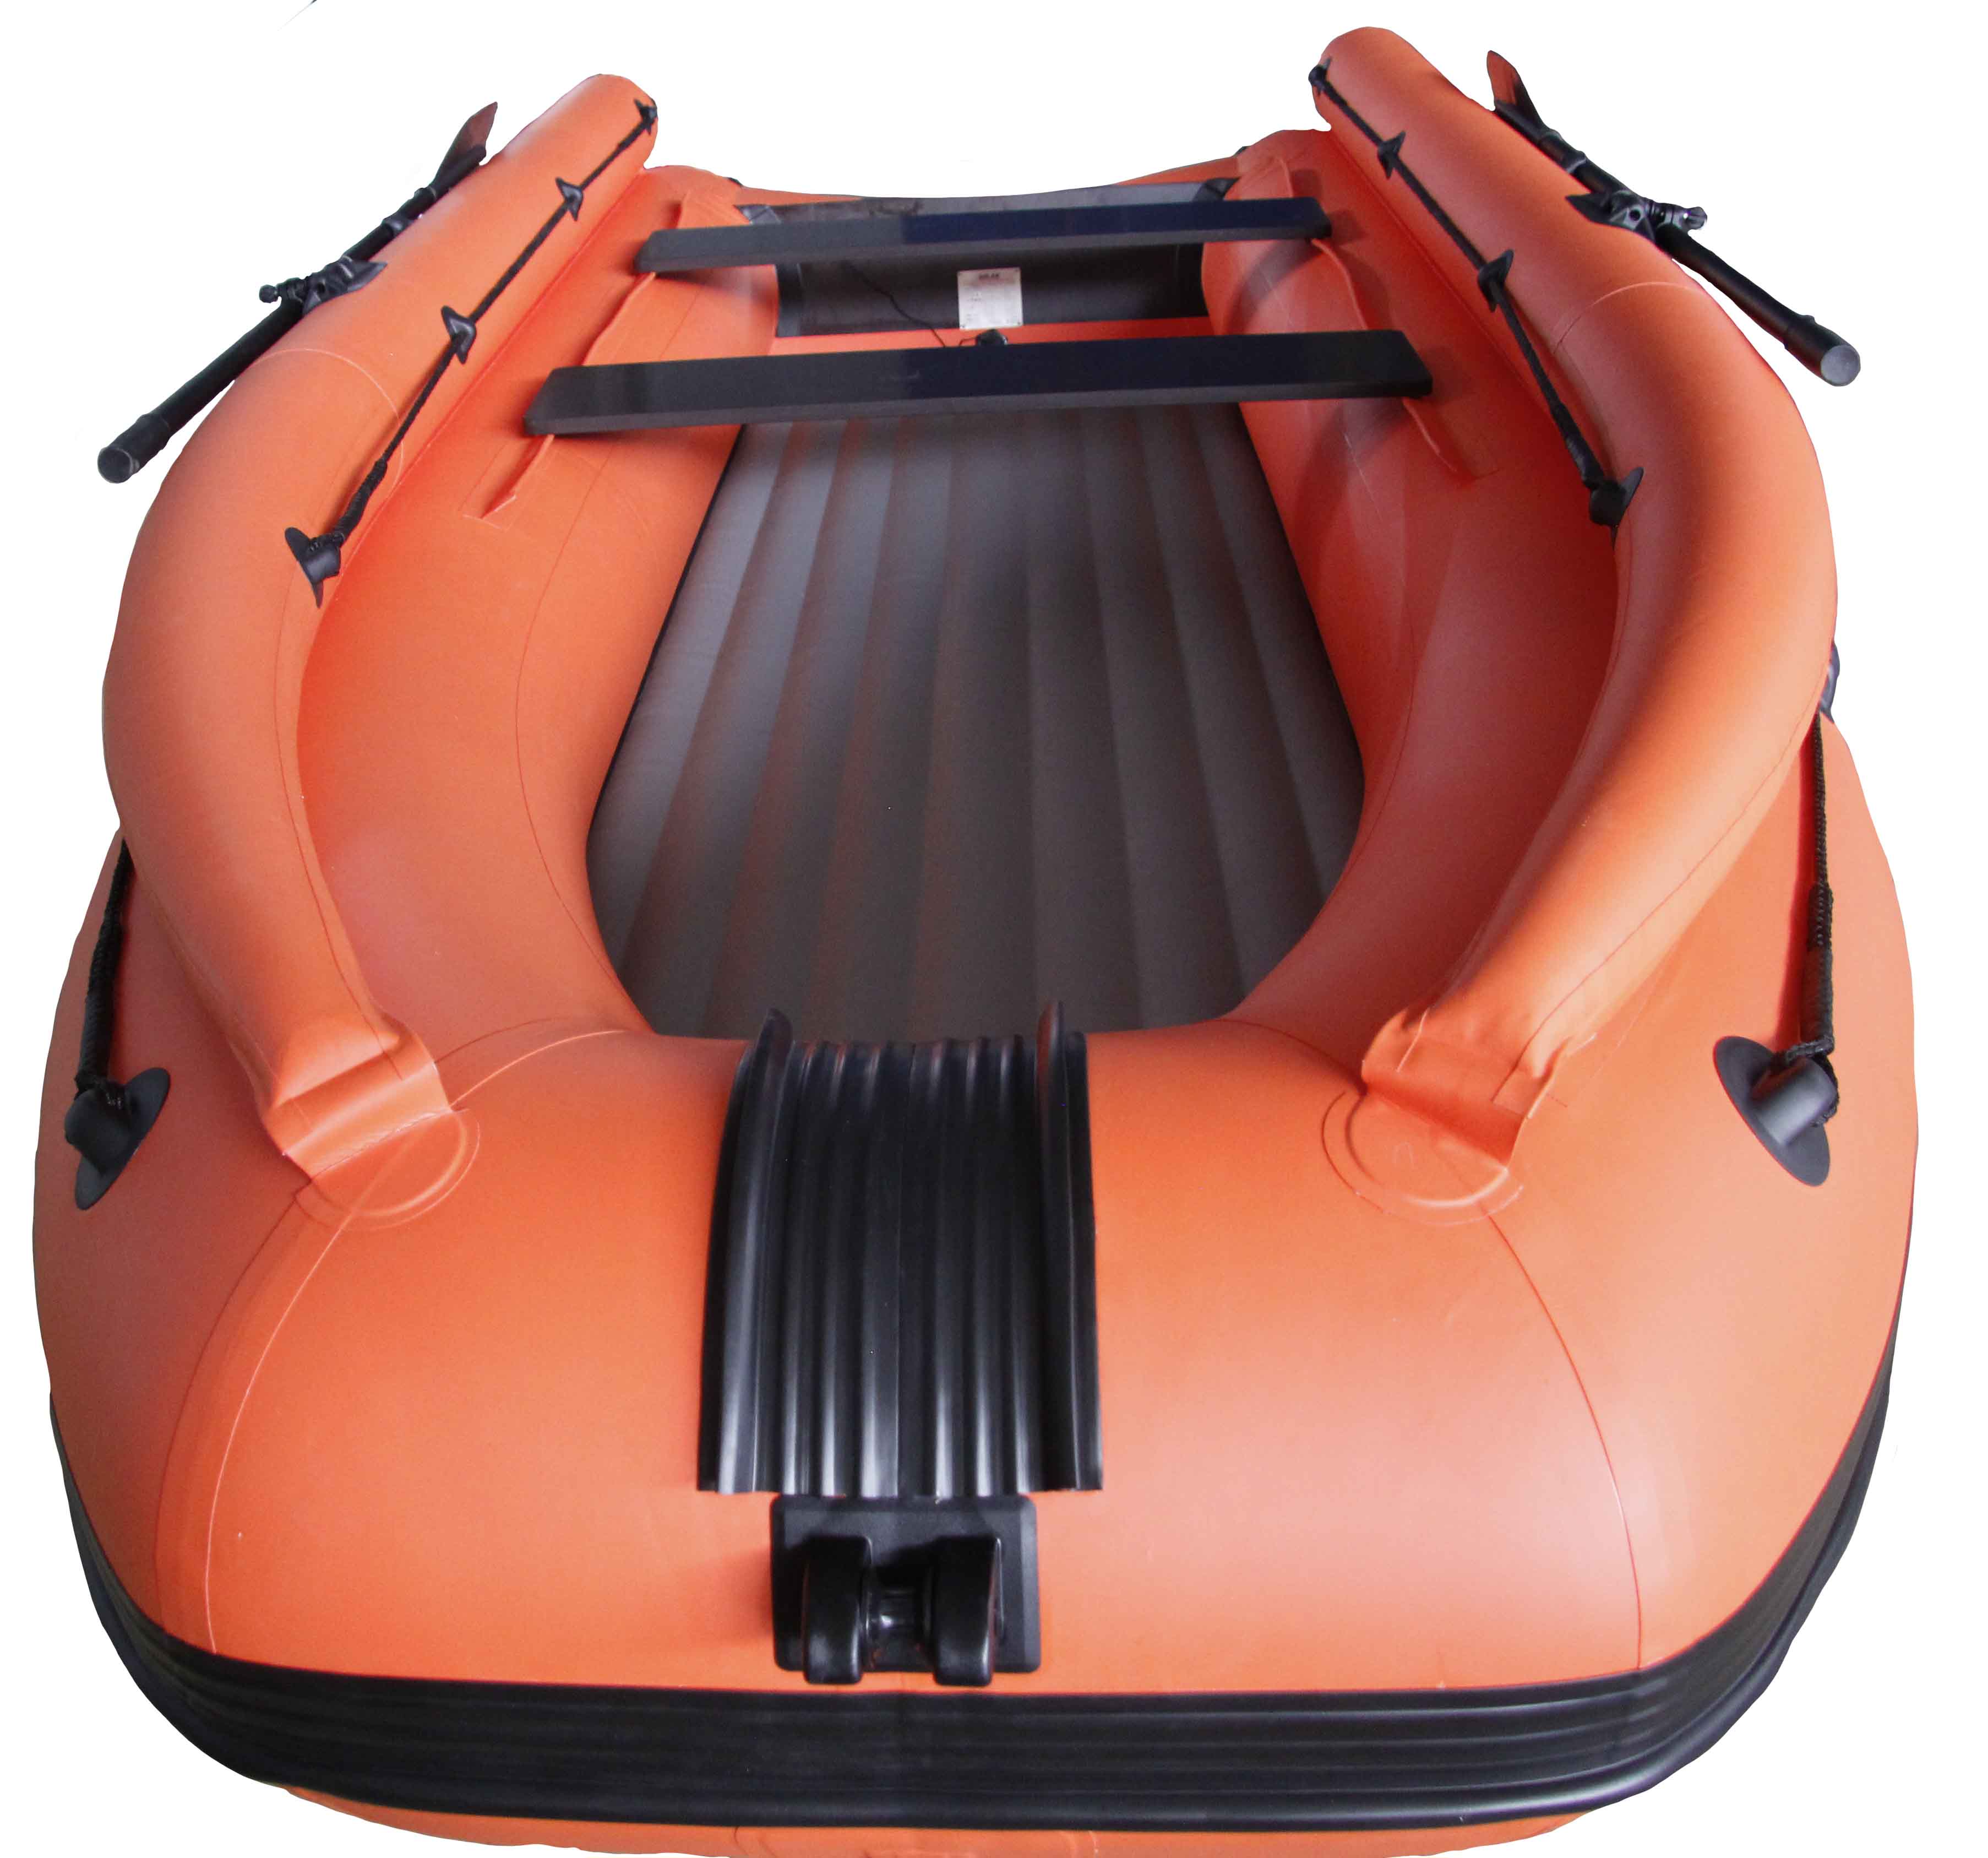 Motor inflatable boat SOLAR-420 Strela Jet tunnel